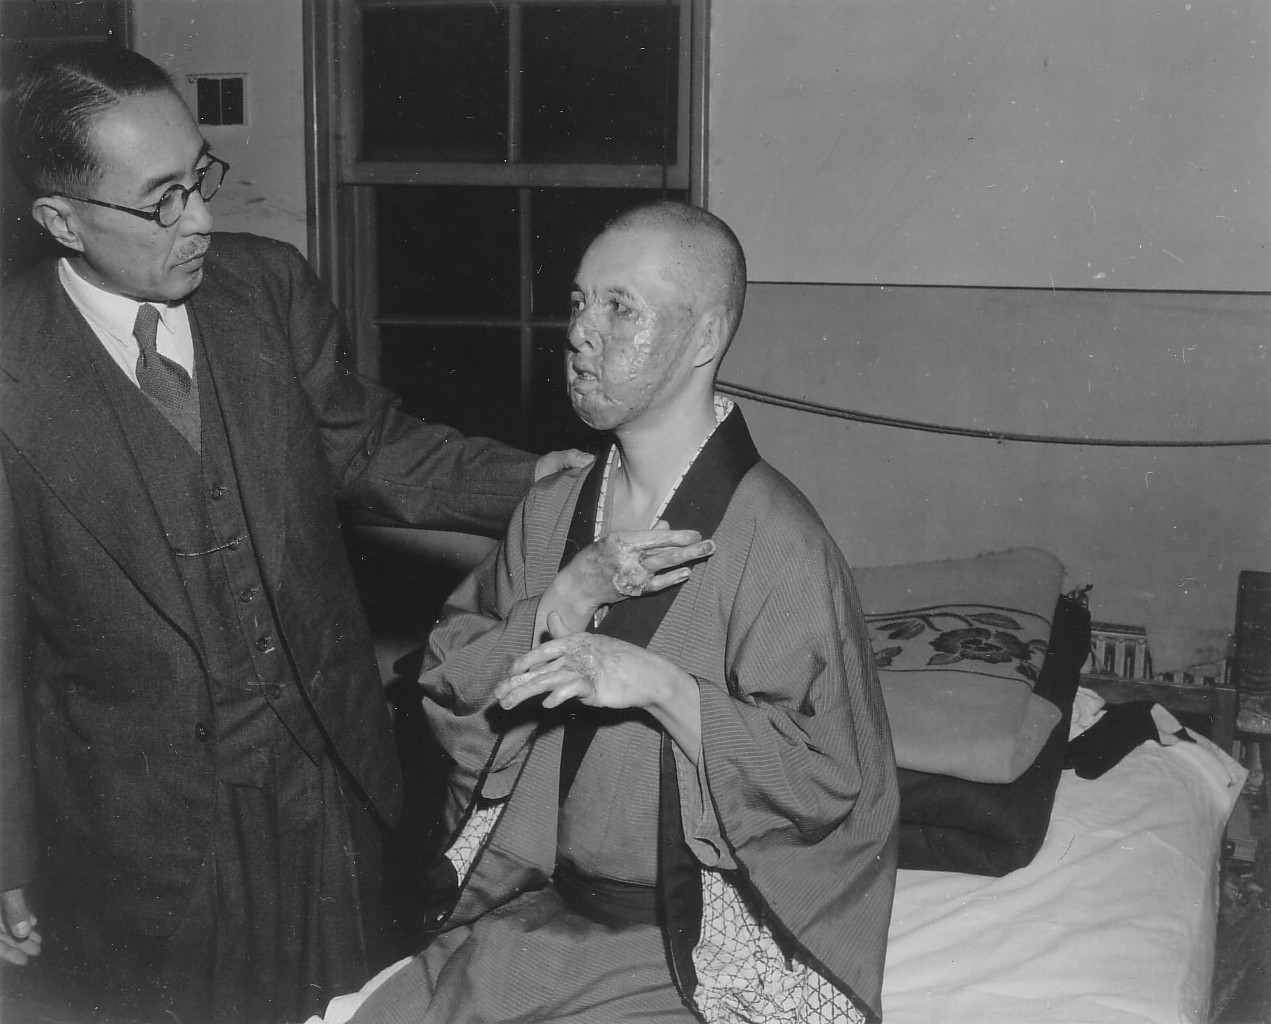 Disfigured survivor of bombings on Tokyo, Japan, post-war